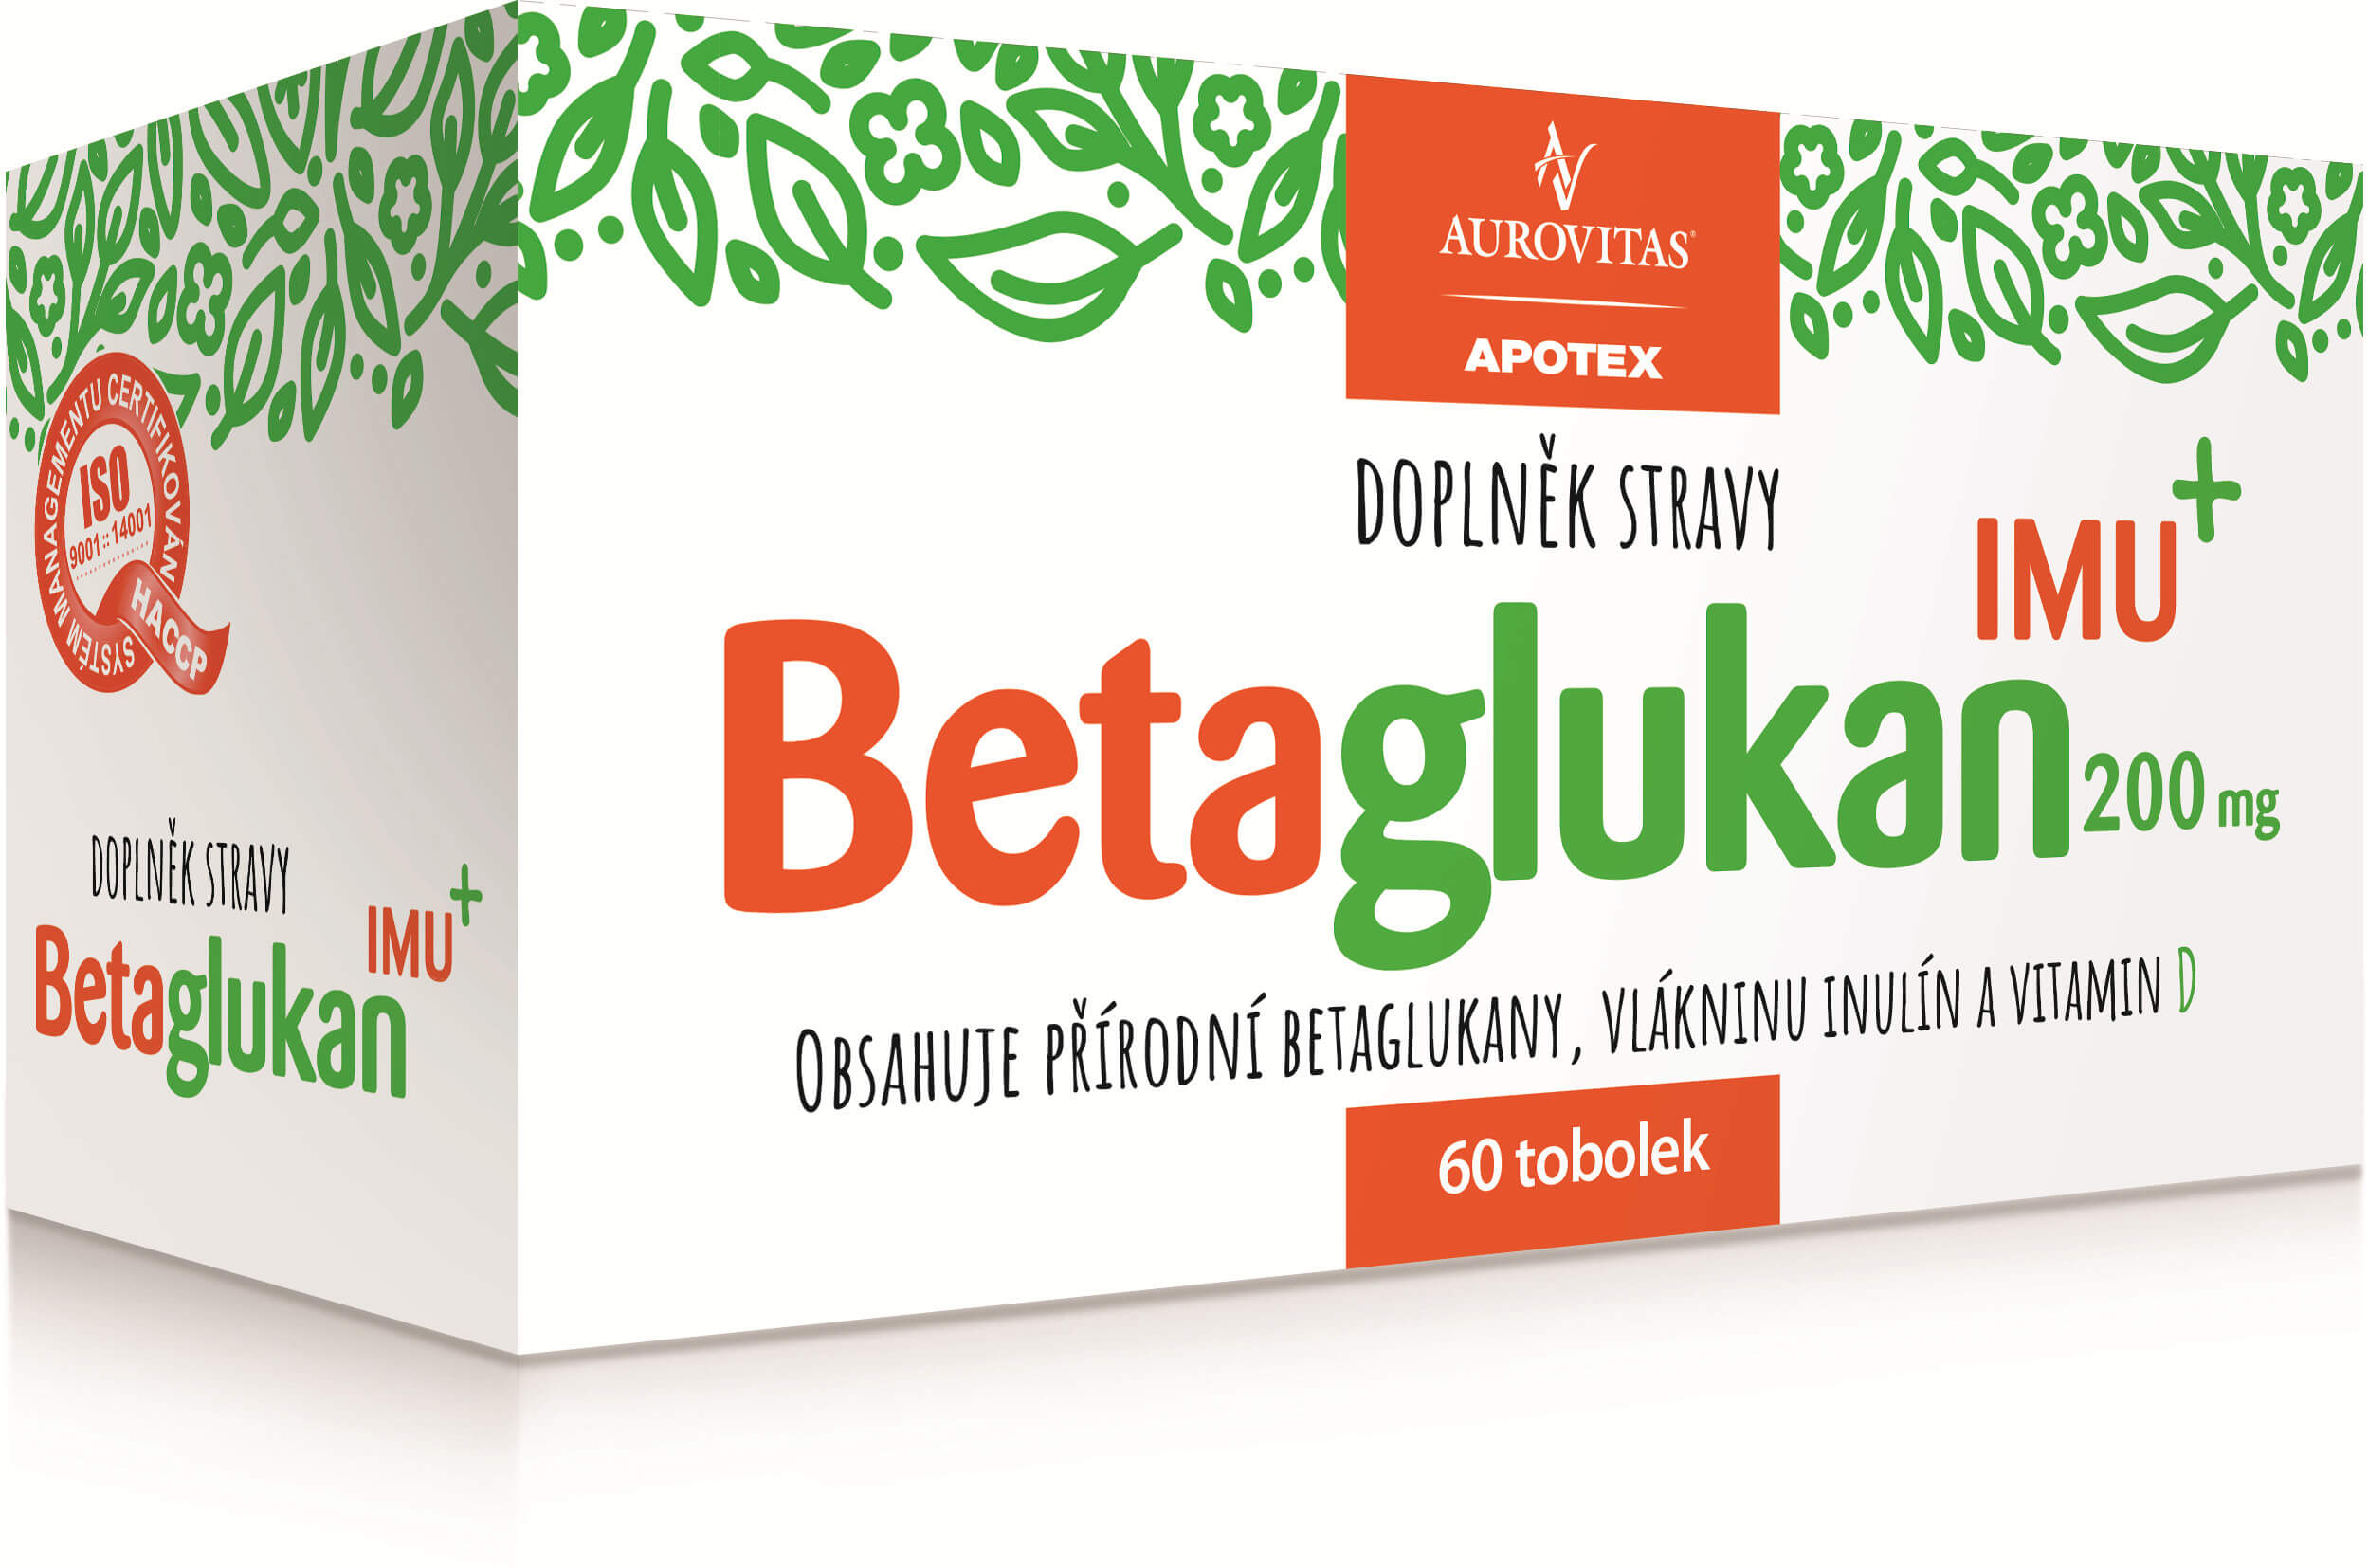 Aurovitas Betaglukan IMU 200 mg 60 tob.